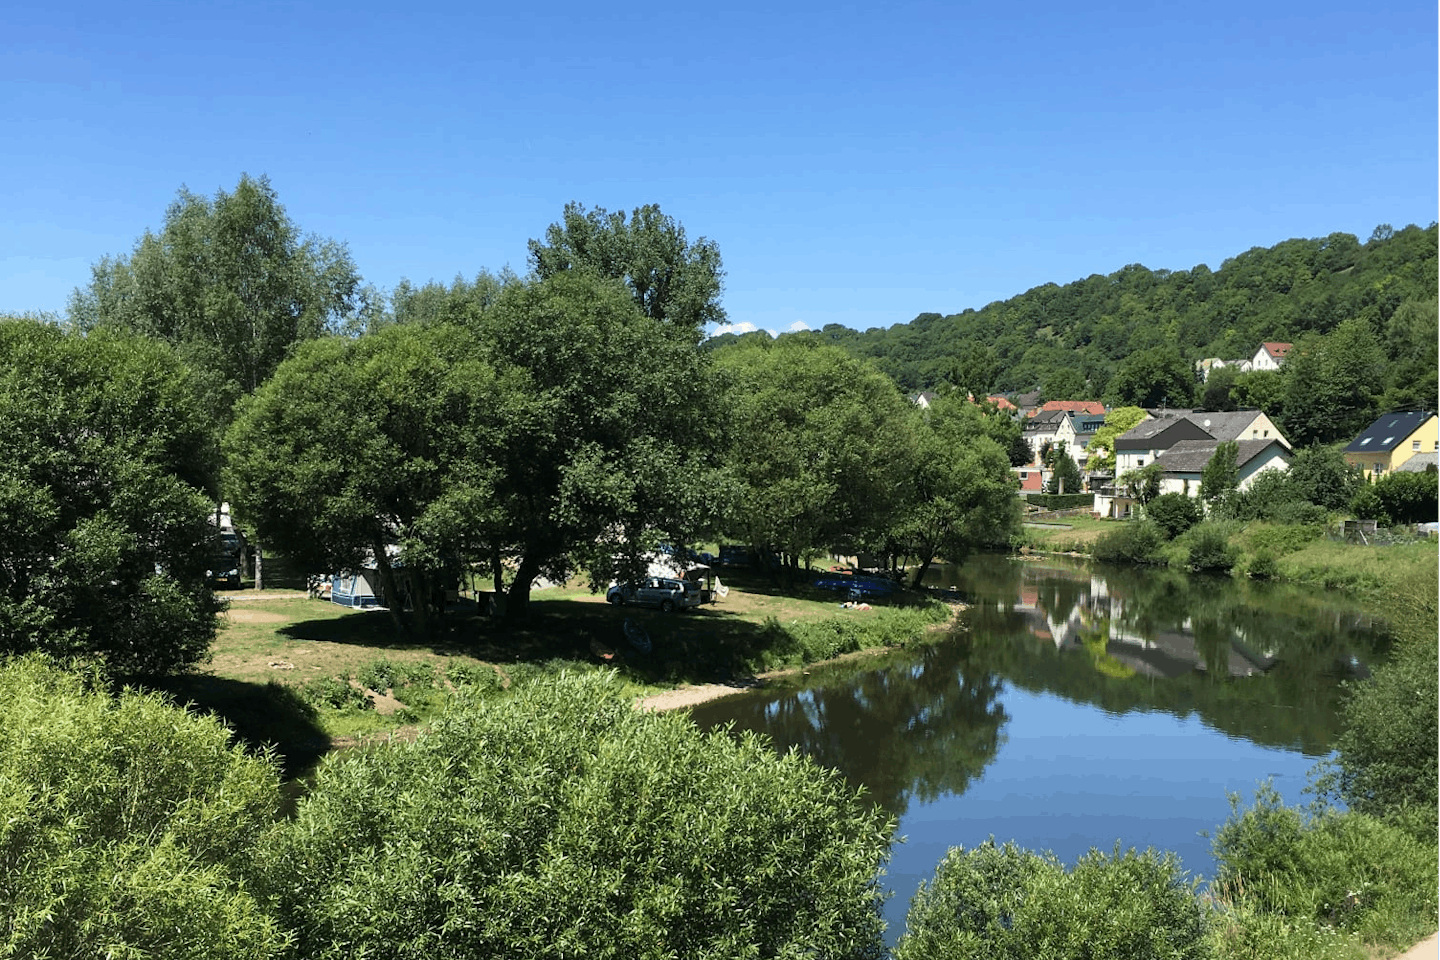 Vodatent @ Camping du Rivage - Blick auf den Campingplatz am See